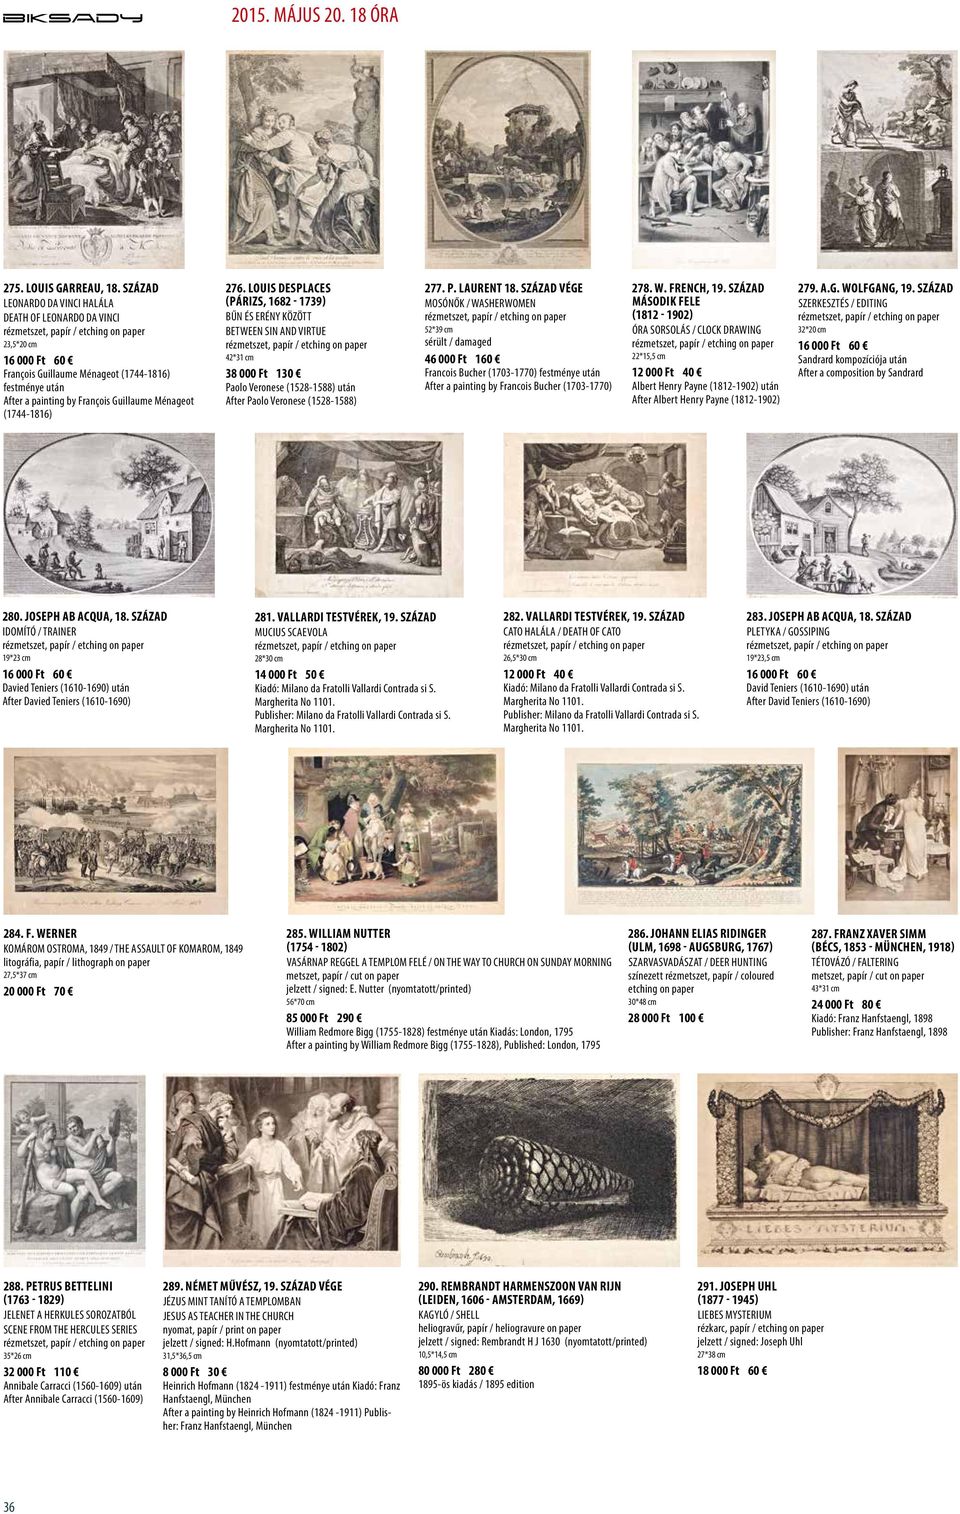 Louis Desplaces (Párizs, 1682-1739) Bűn és erény között Between sin and virtue 42*31 cm 38 000 Ft 130 Paolo Veronese (1528-1588) után After Paolo Veronese (1528-1588) 277. P. Laurent 18.